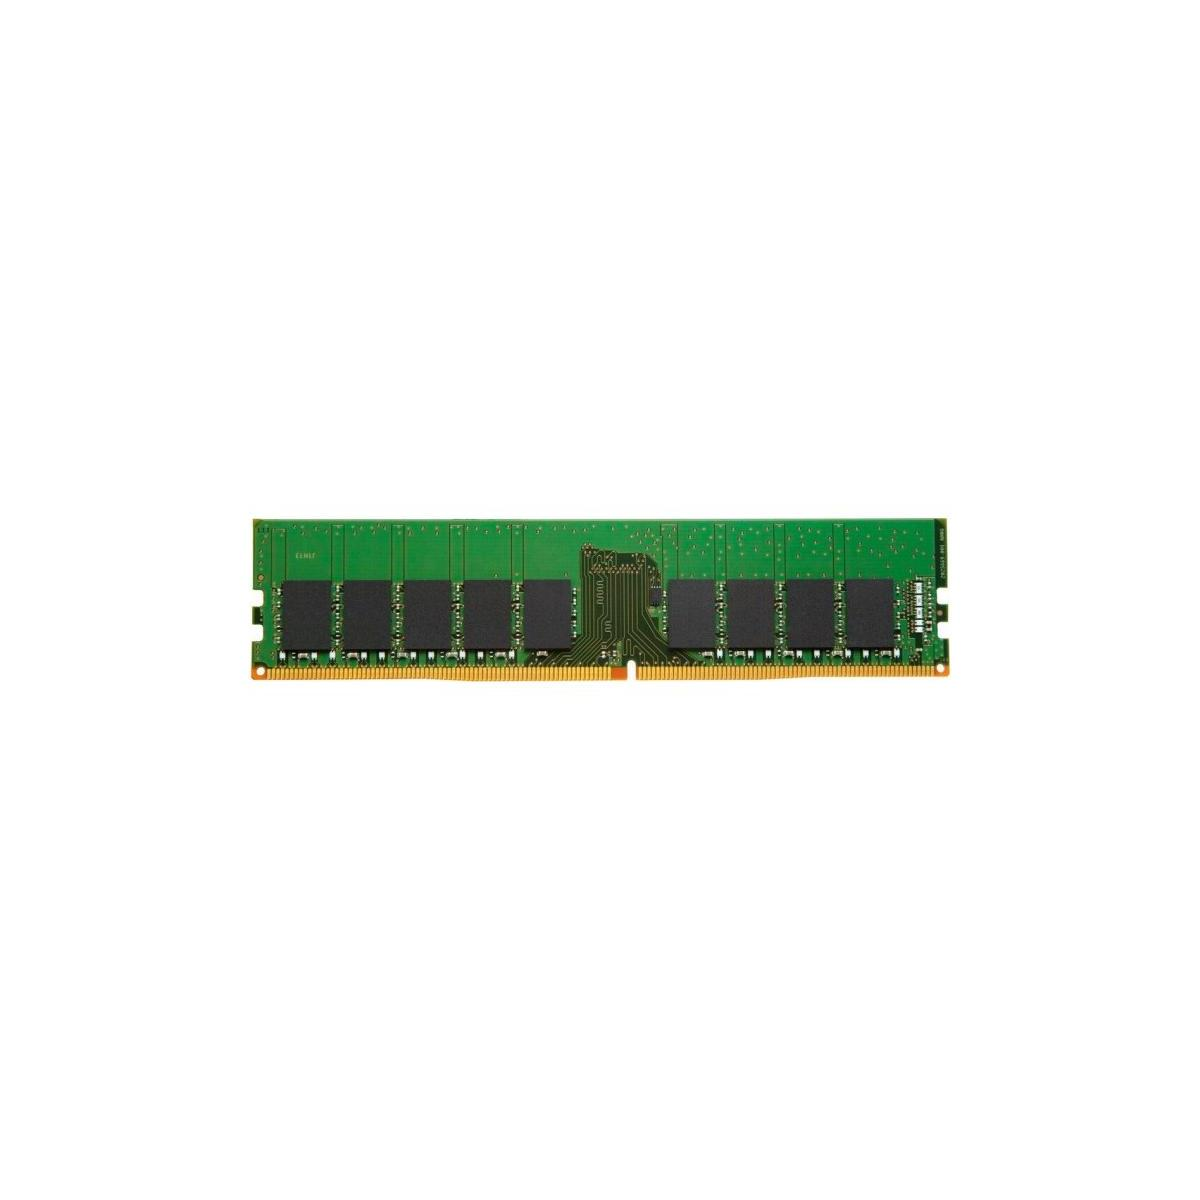 8 DDR4 DDR4 ECC KINGSTON Speicher 3200MHz KINGSTON Arbeitsspeicher CL22 DIMM GB Komponenten ECC 8GB